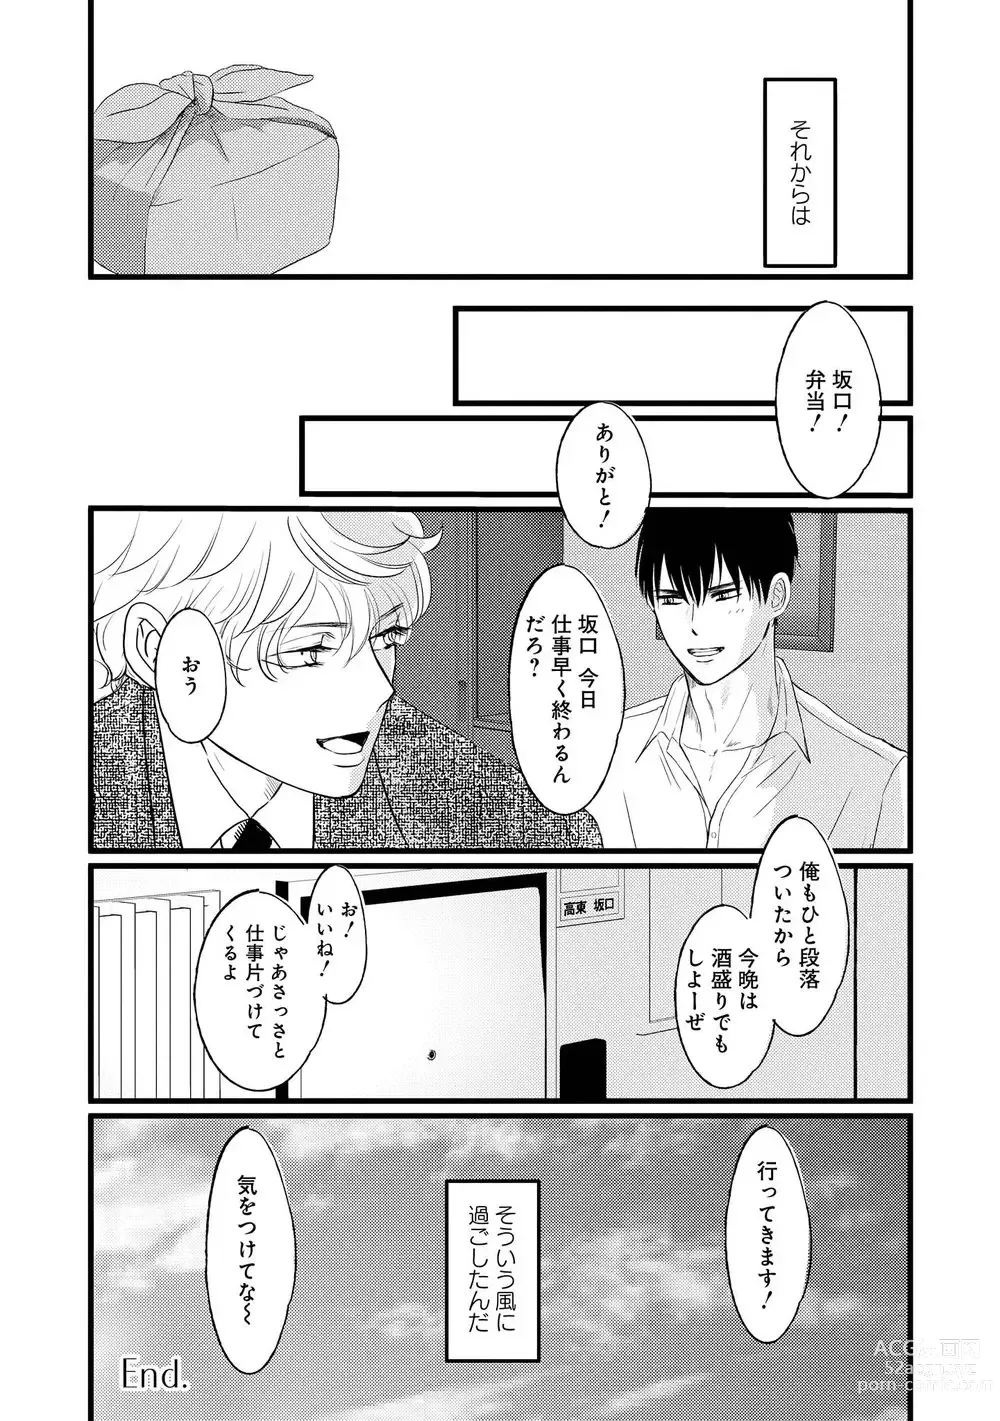 Page 148 of manga AHOERO